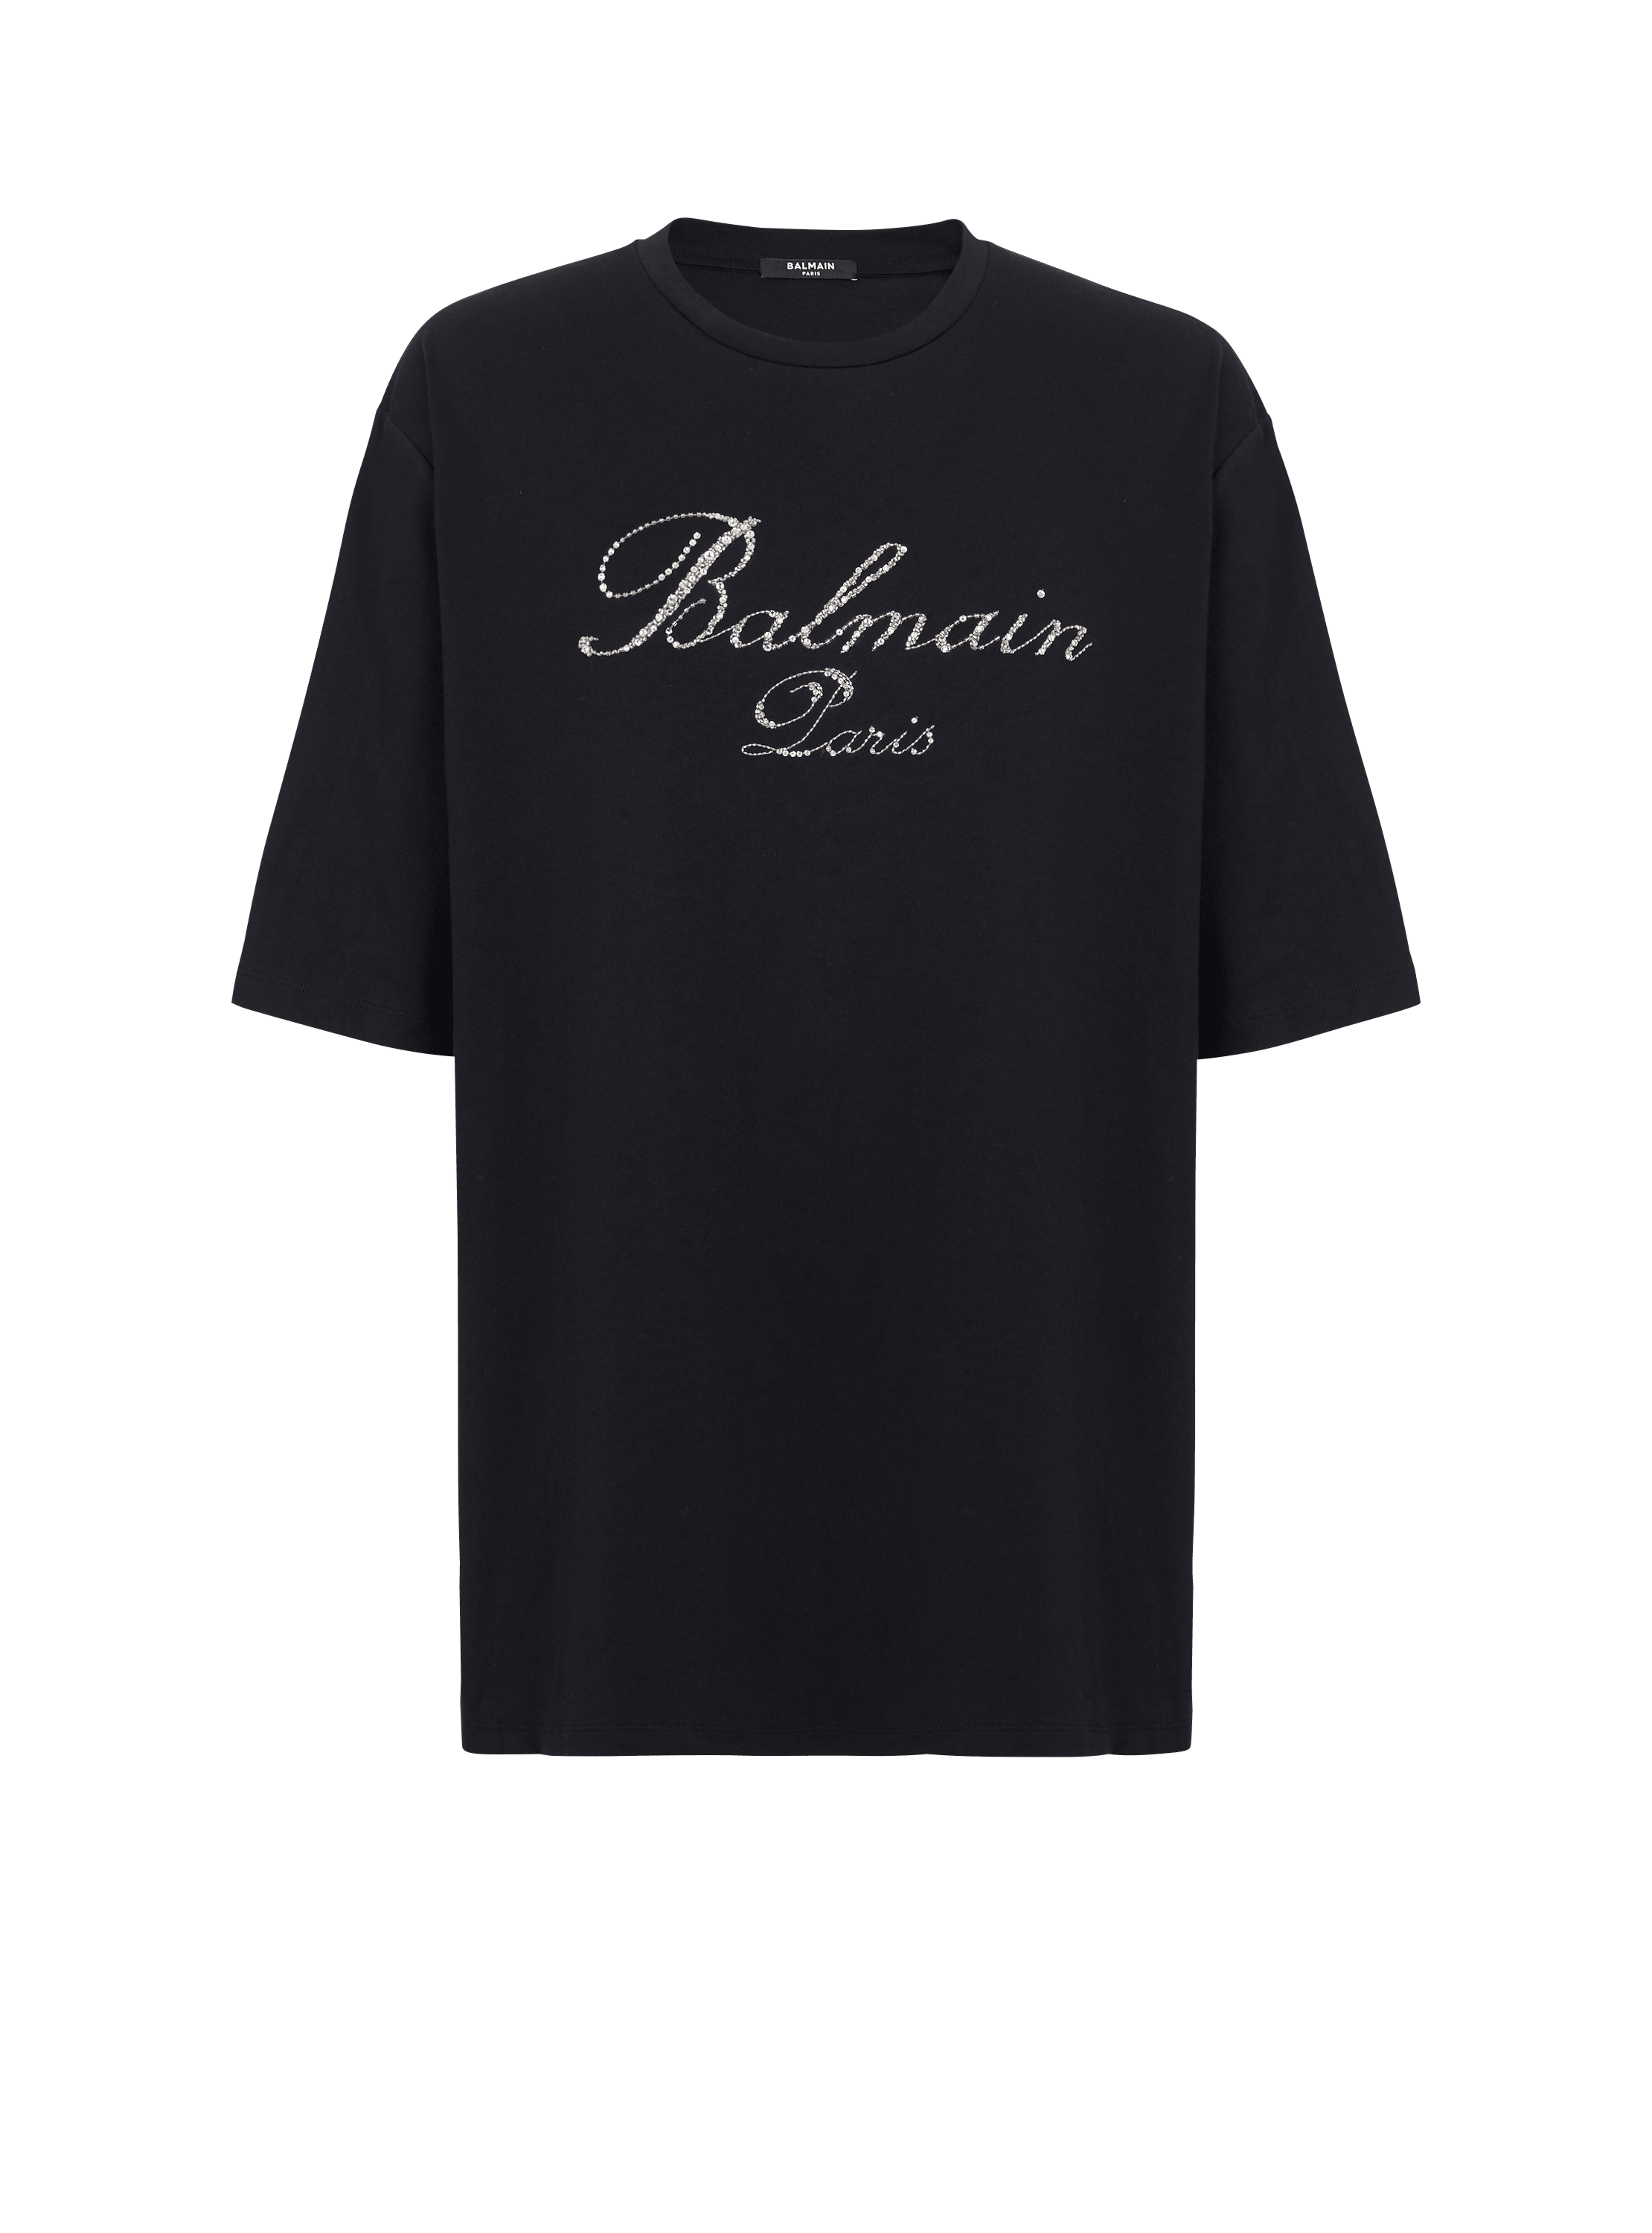 Balmain Signature embroidered T-shirt, black, hi-res